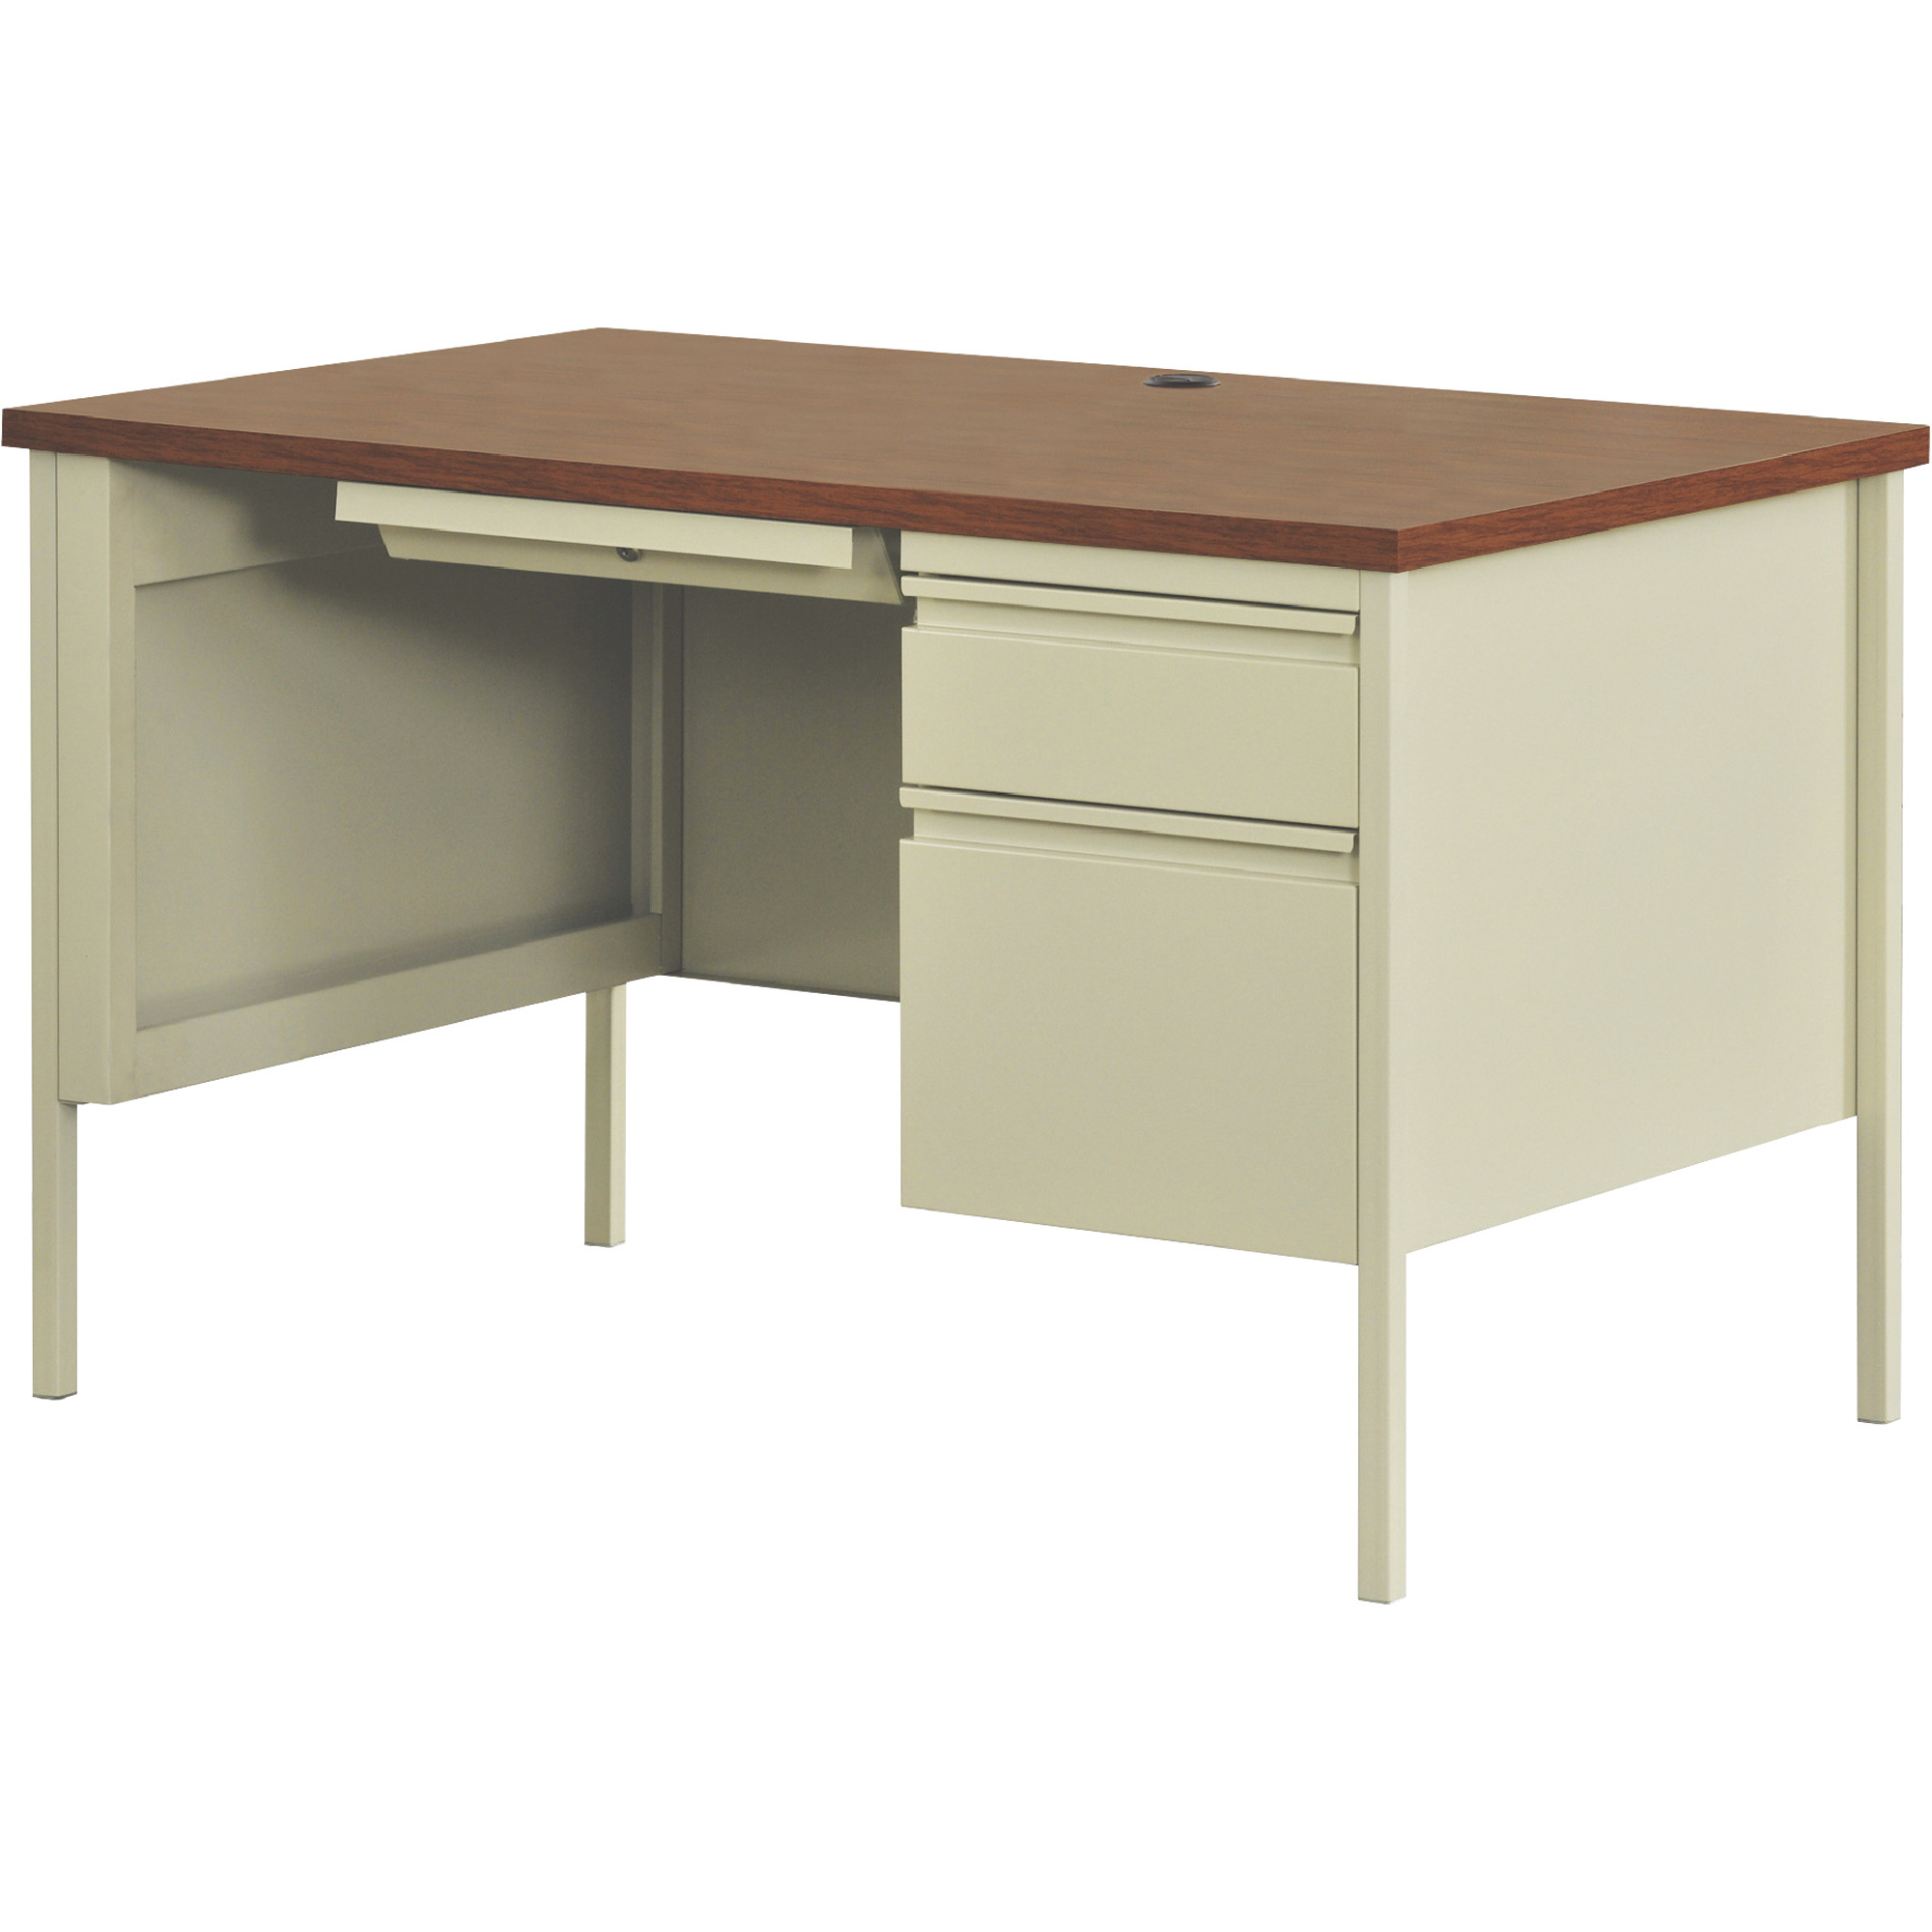 Traditional Pedestal Desk — Putty/Oak, 48Inch W x 30Inch D x 29 1/2Inch H, Model - Hirsh Industries 20091